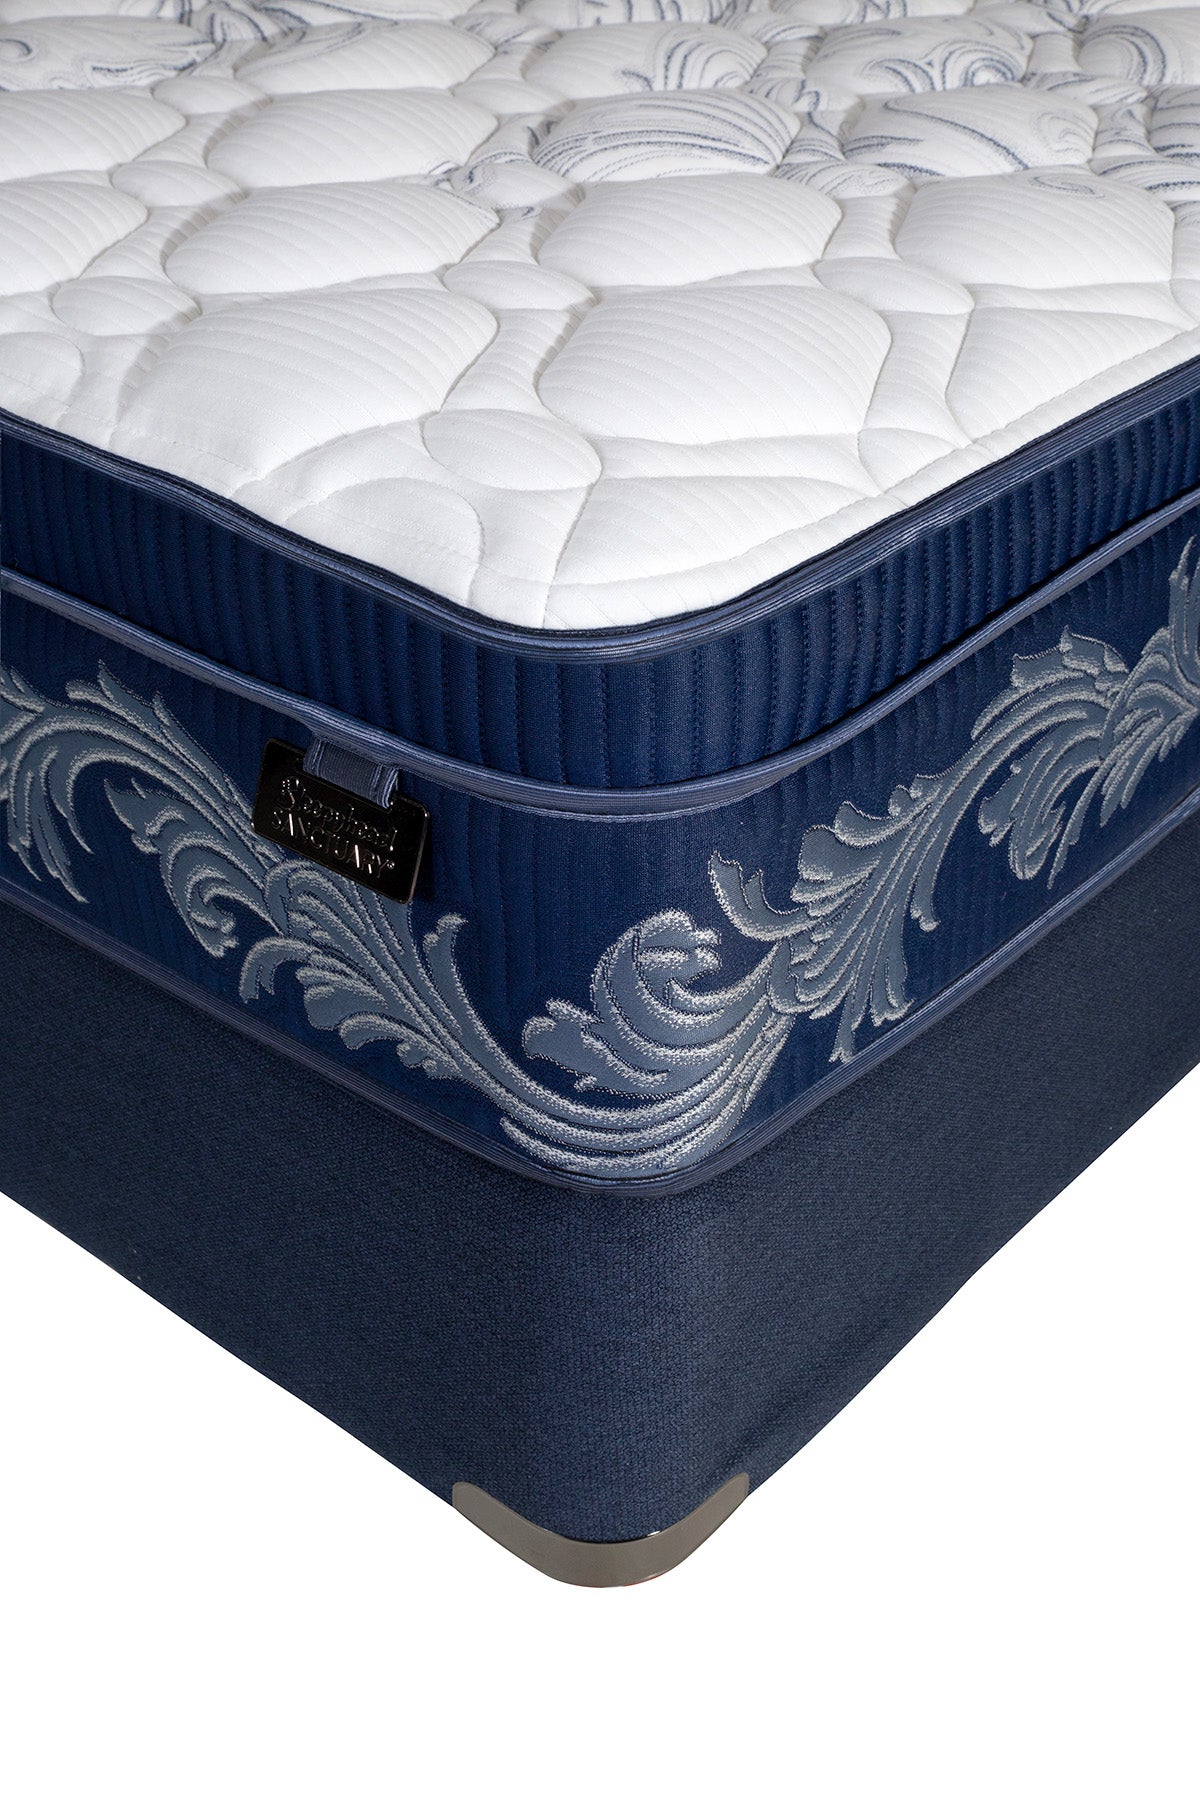 midnight5-long-single-mattress-2